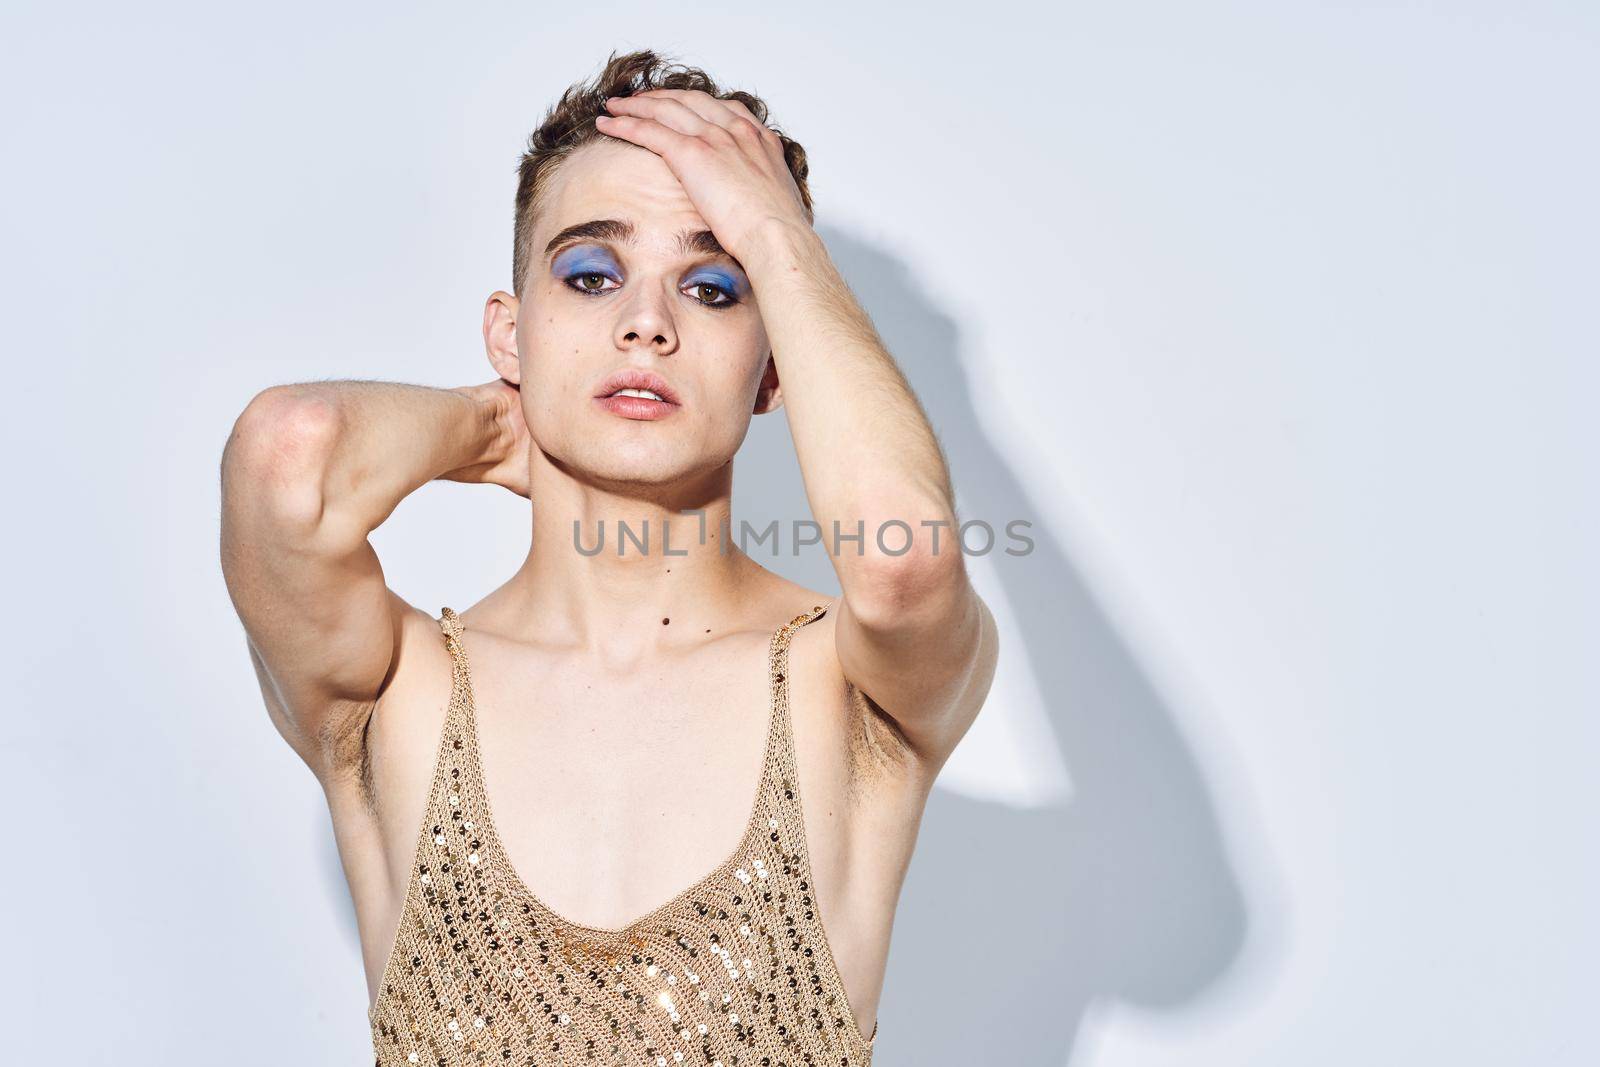 man with female makeup dress posing fashion transgender. High quality photo